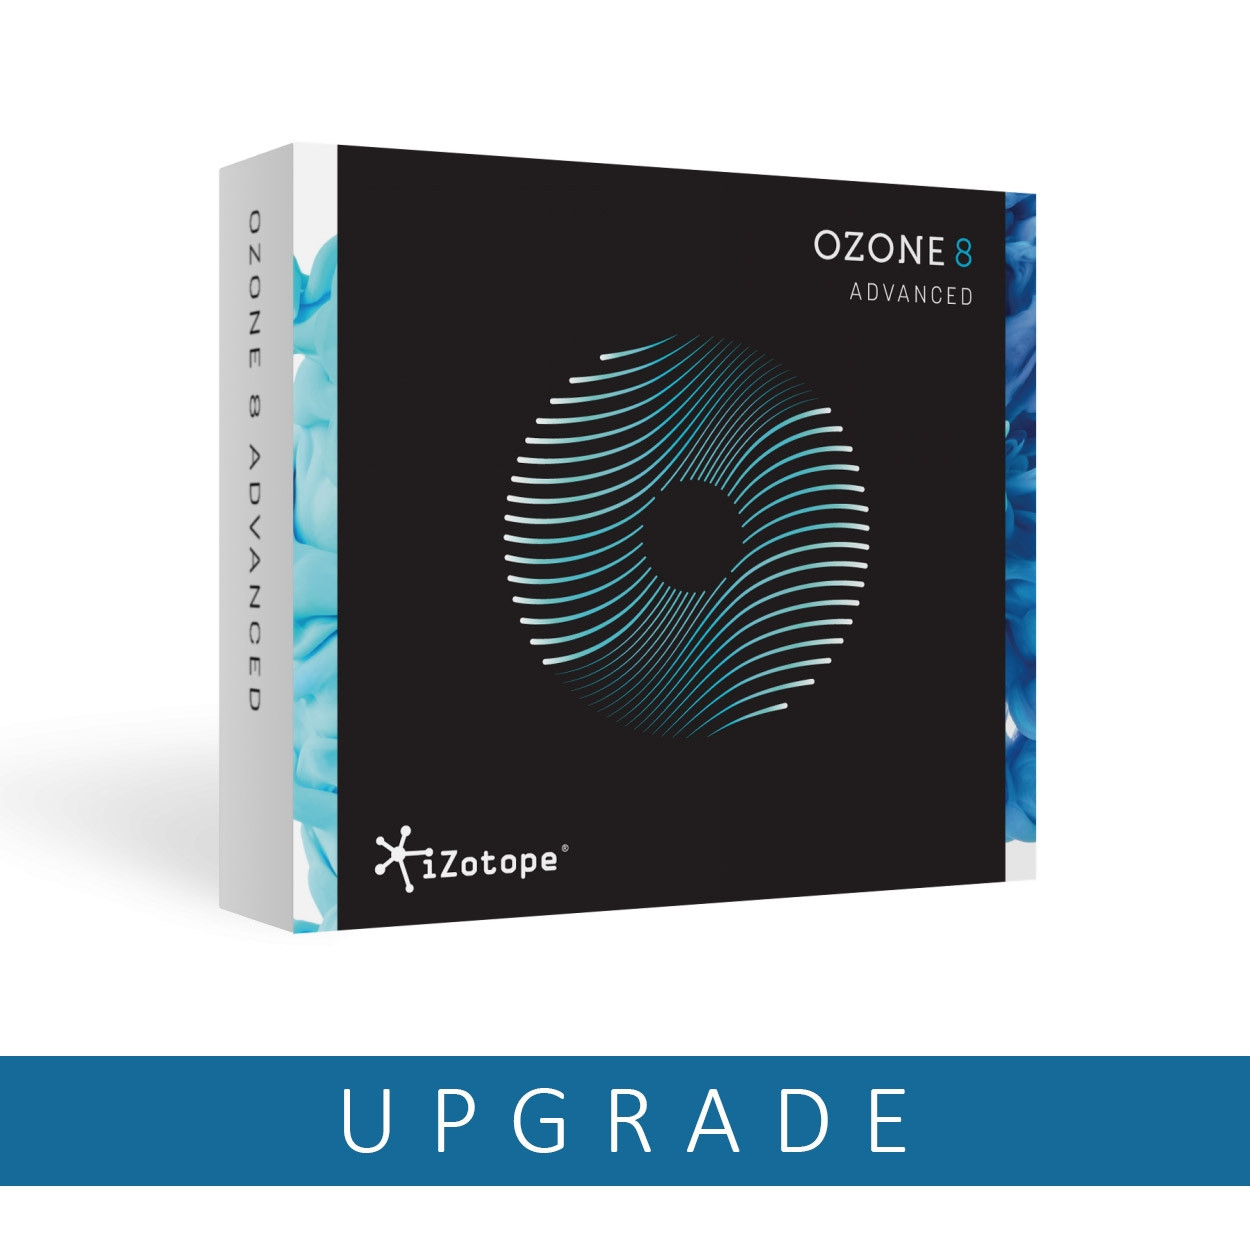 izotope ozone 5 price